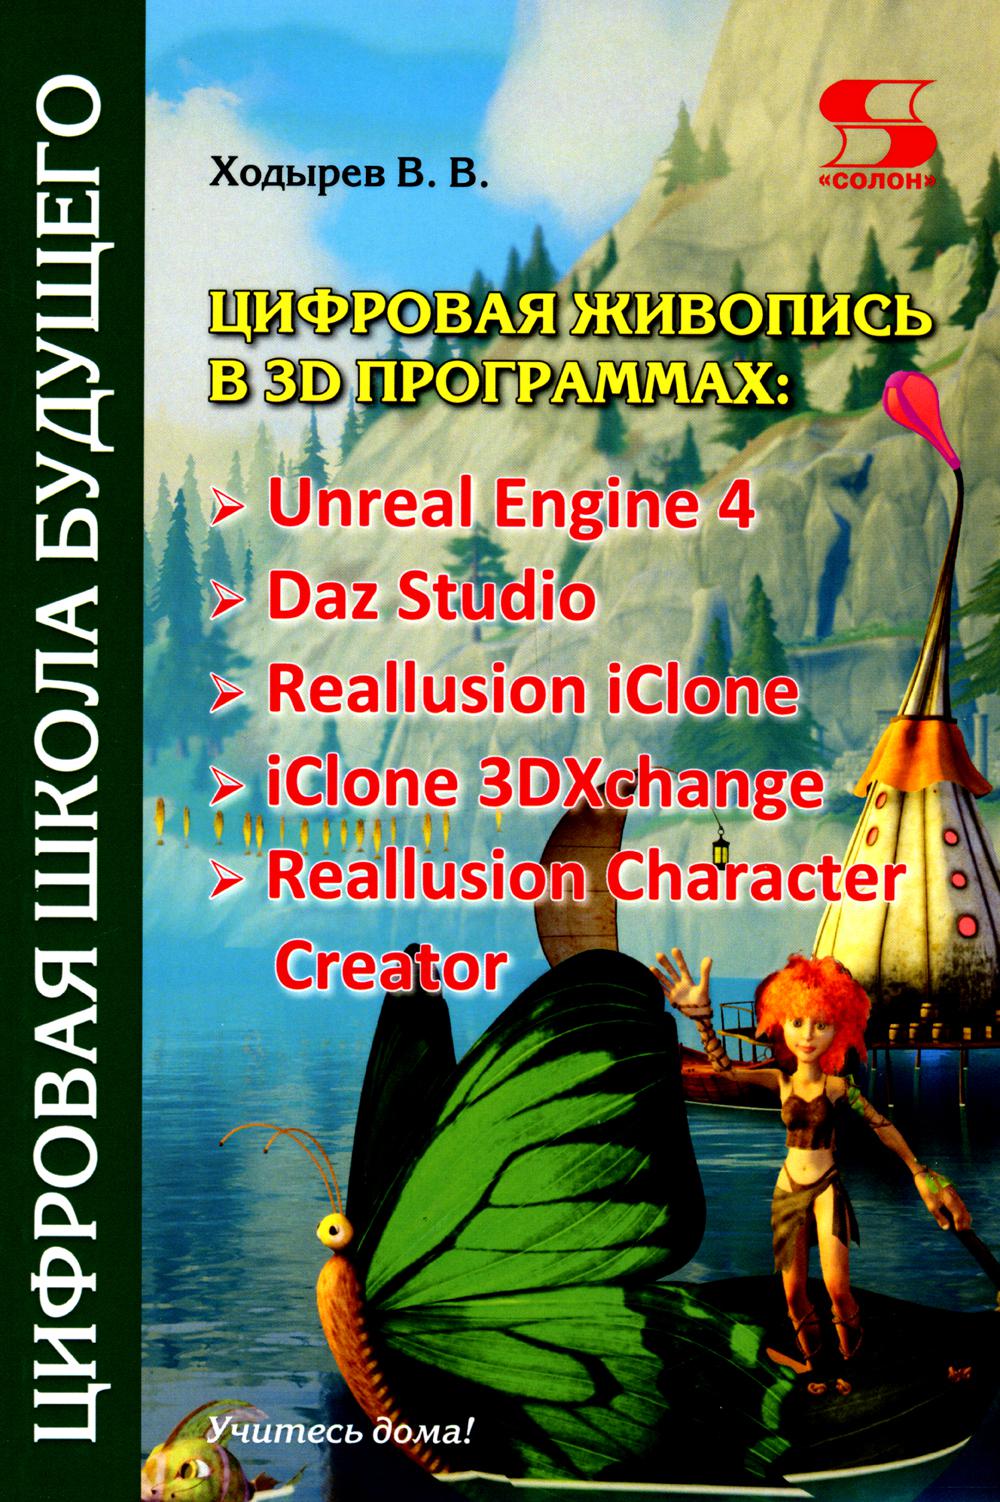    3D : Unreal Engine 4, Daz Studio, Reallusion iClone, iClone 3DXchang